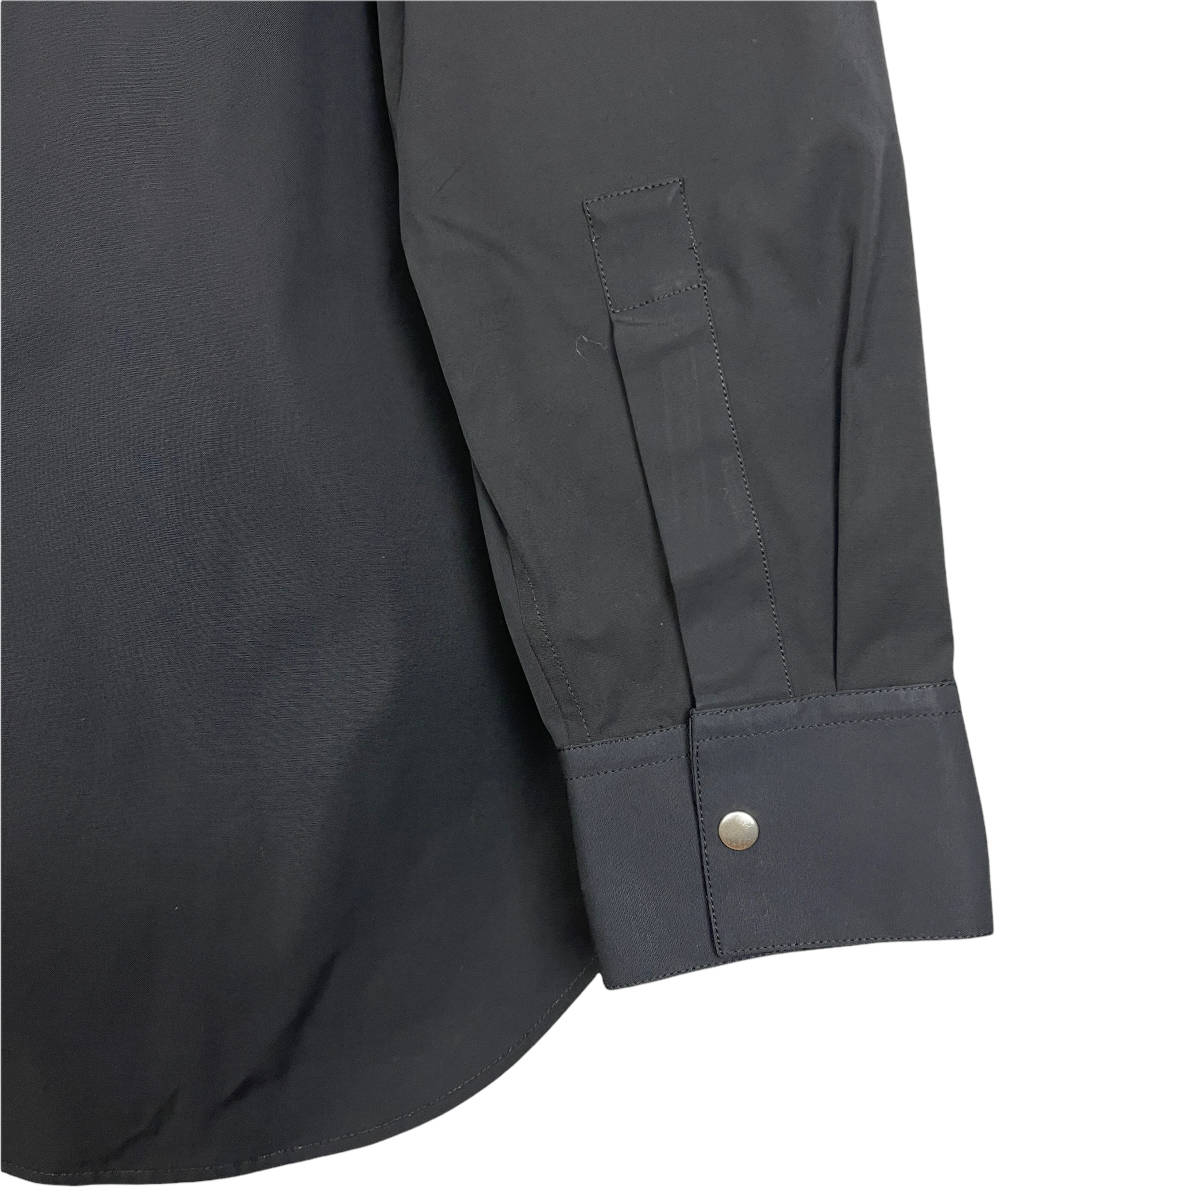 JIL SANDER(ジルサンダー) big silhouette shirts jacket (black)_画像6